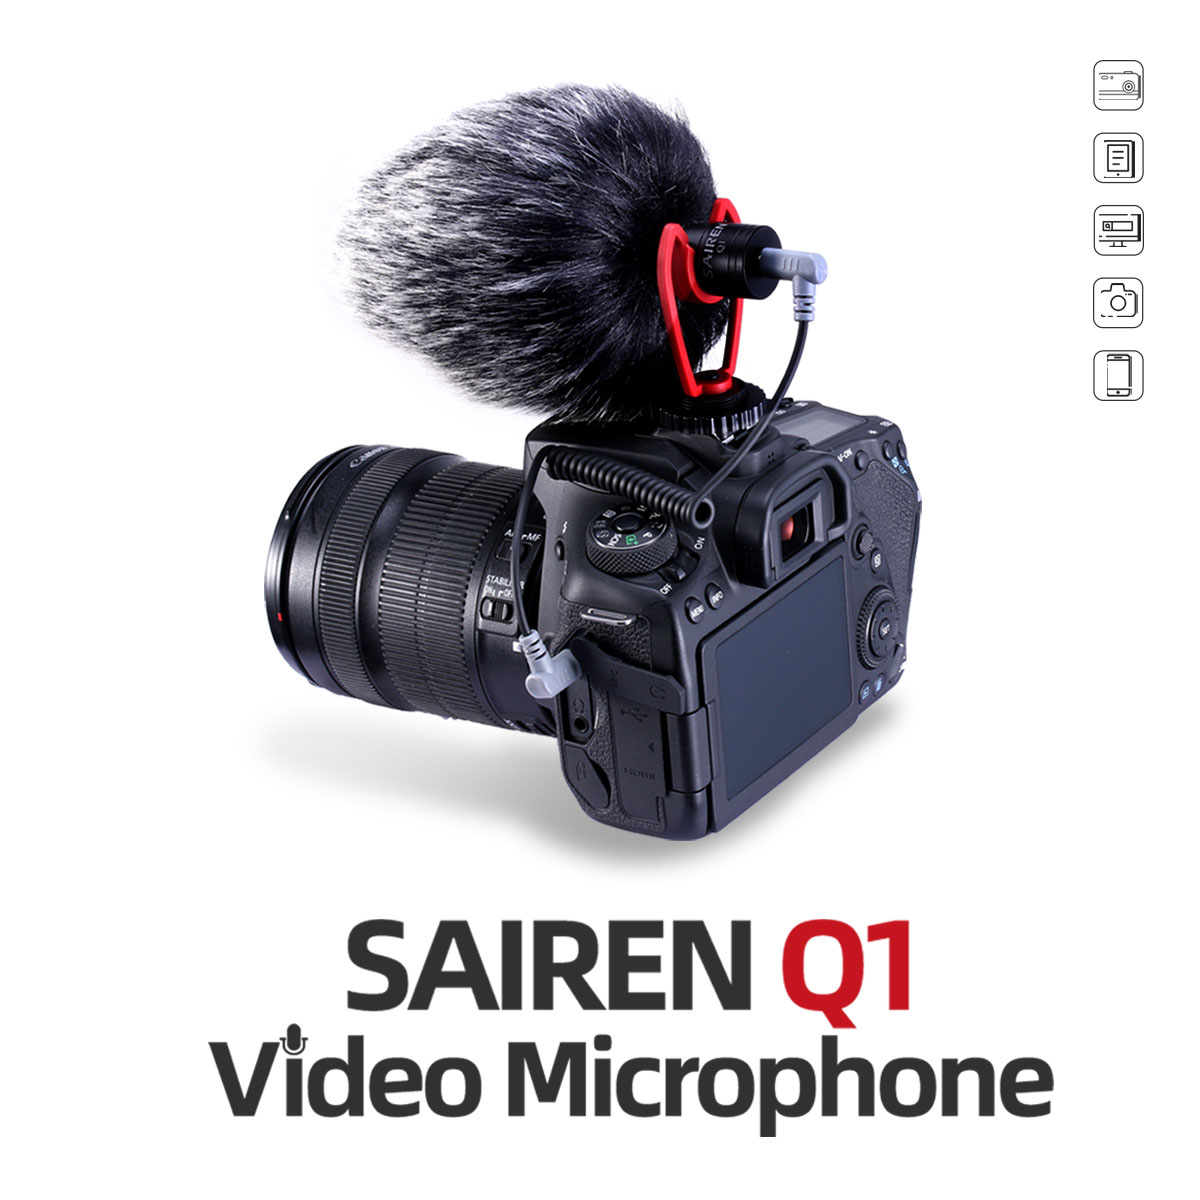 Microphone_Sairen_Q1